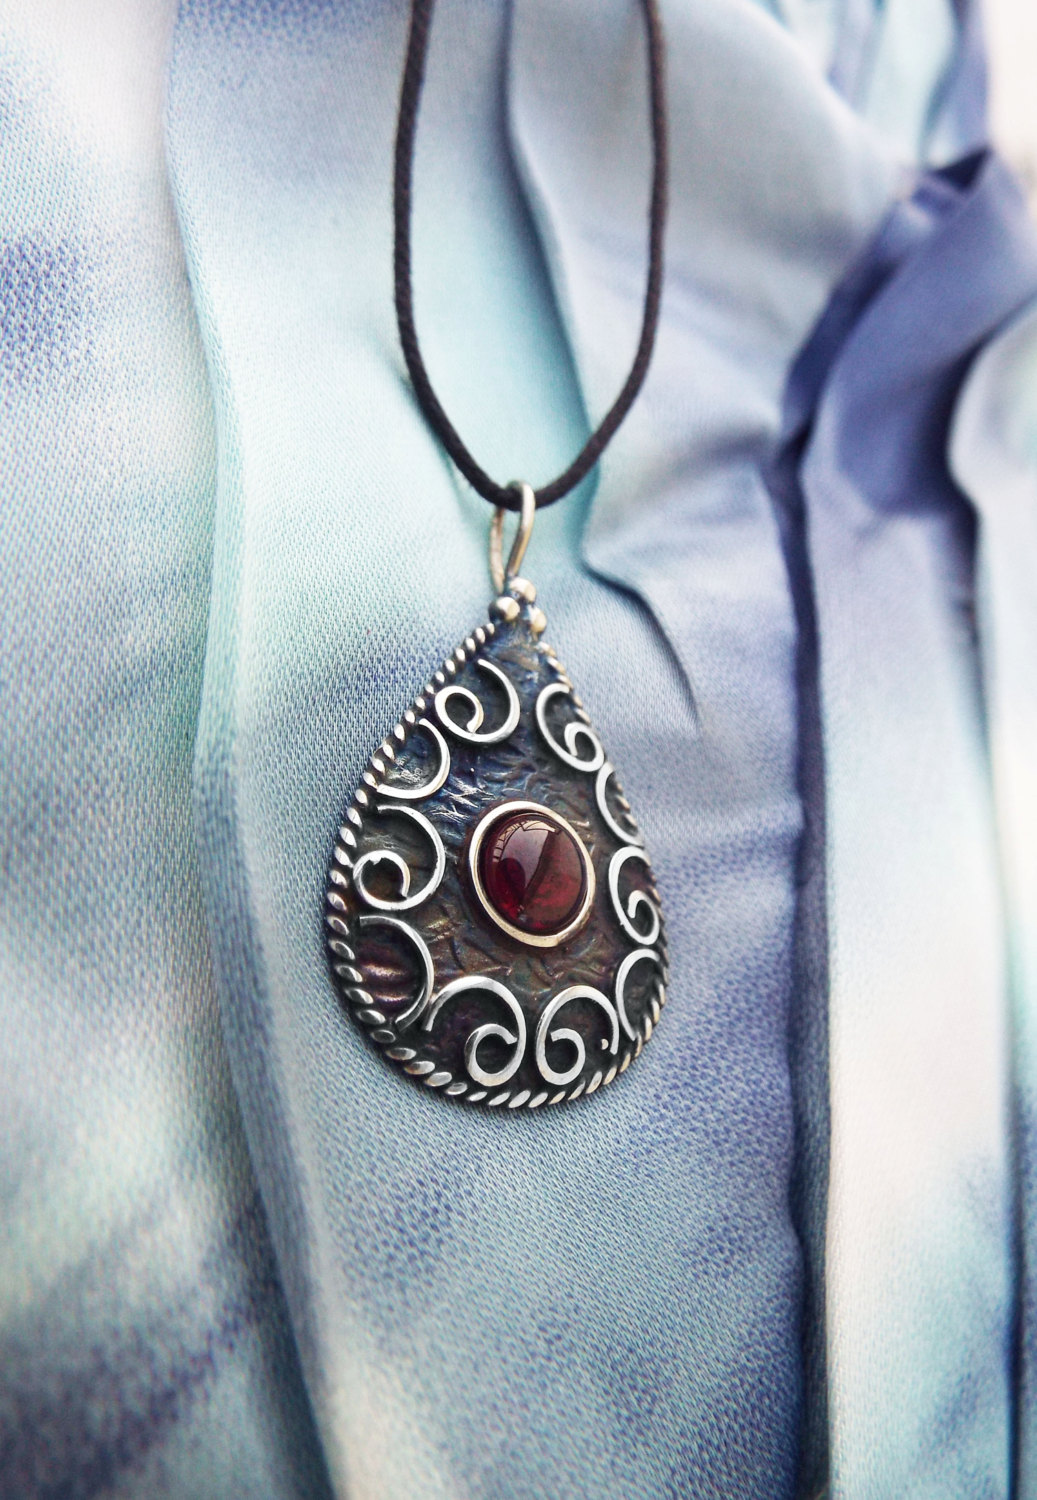 Pendant Silver Garnet Sterling Handmade 925 Gothic Dark Antique Vintage Necklace Jewelry 2